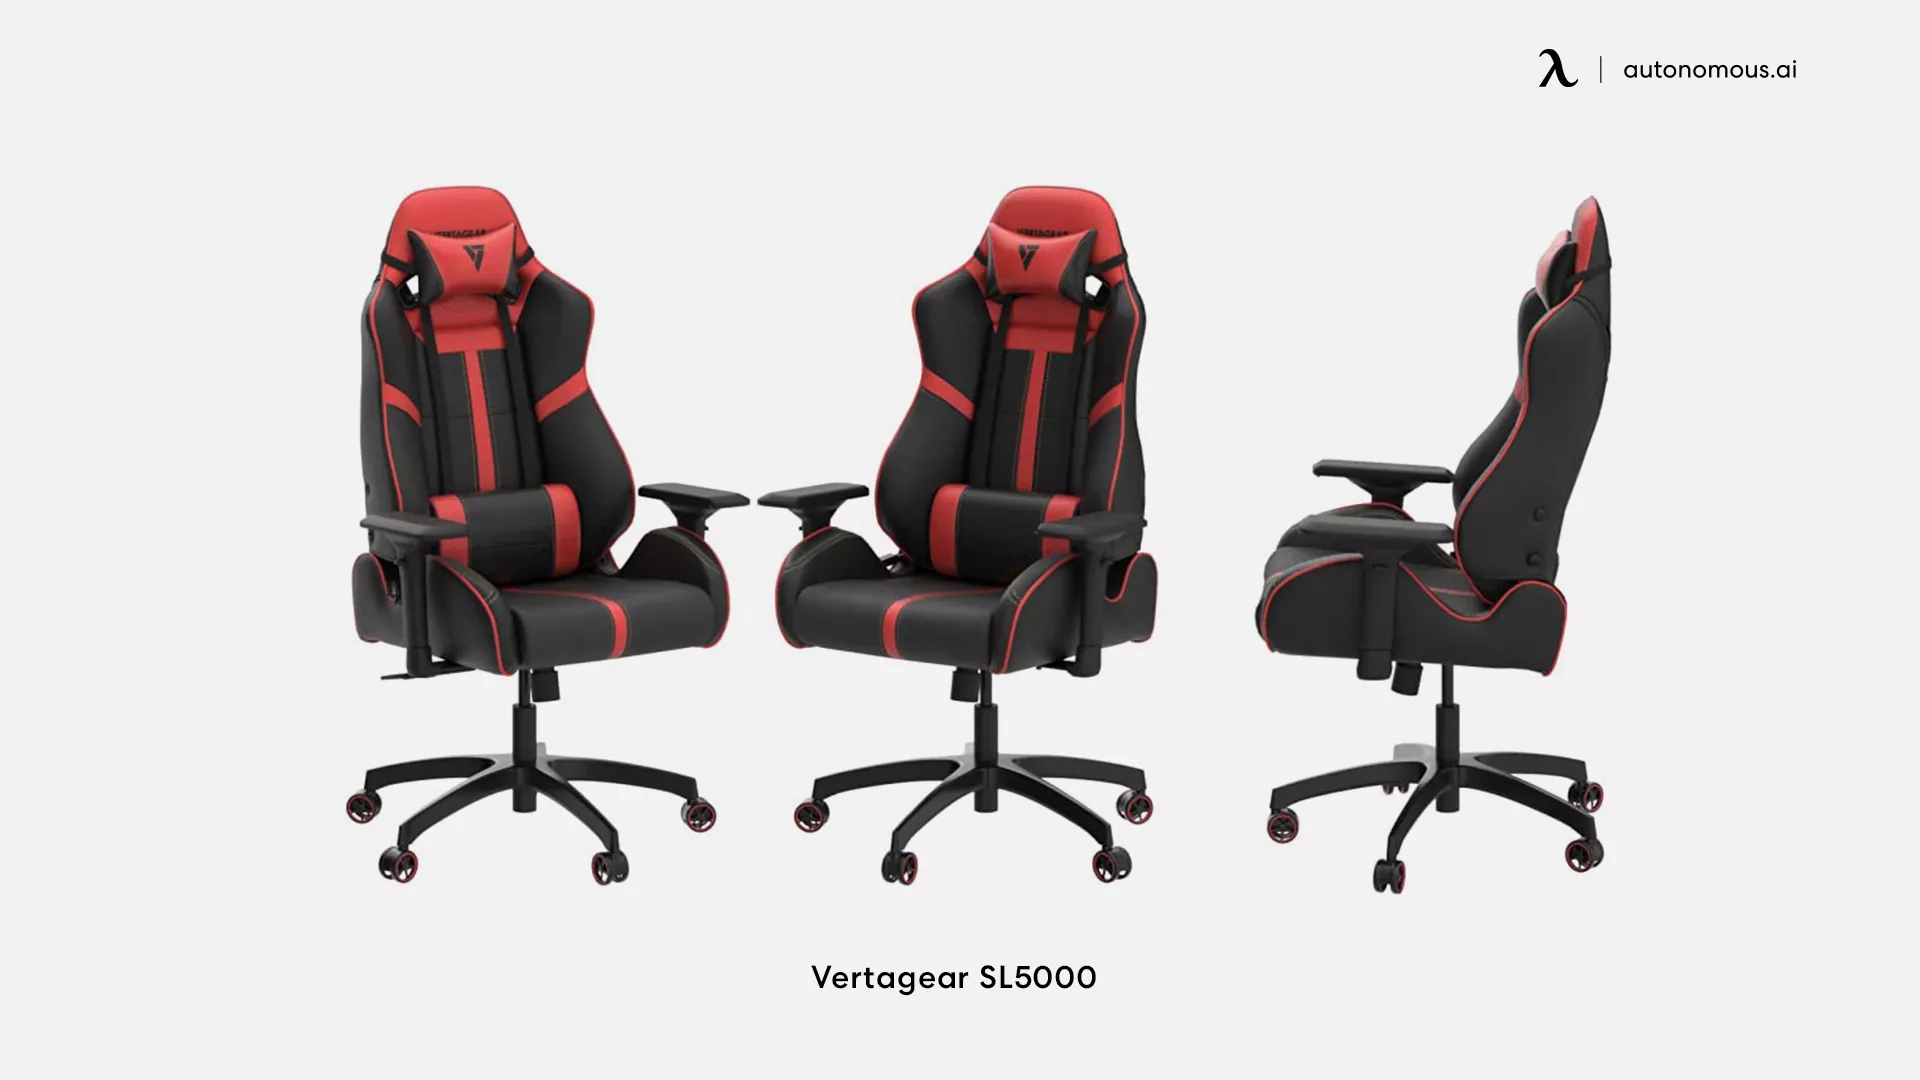 Vertagear SL5000 red gaming chair